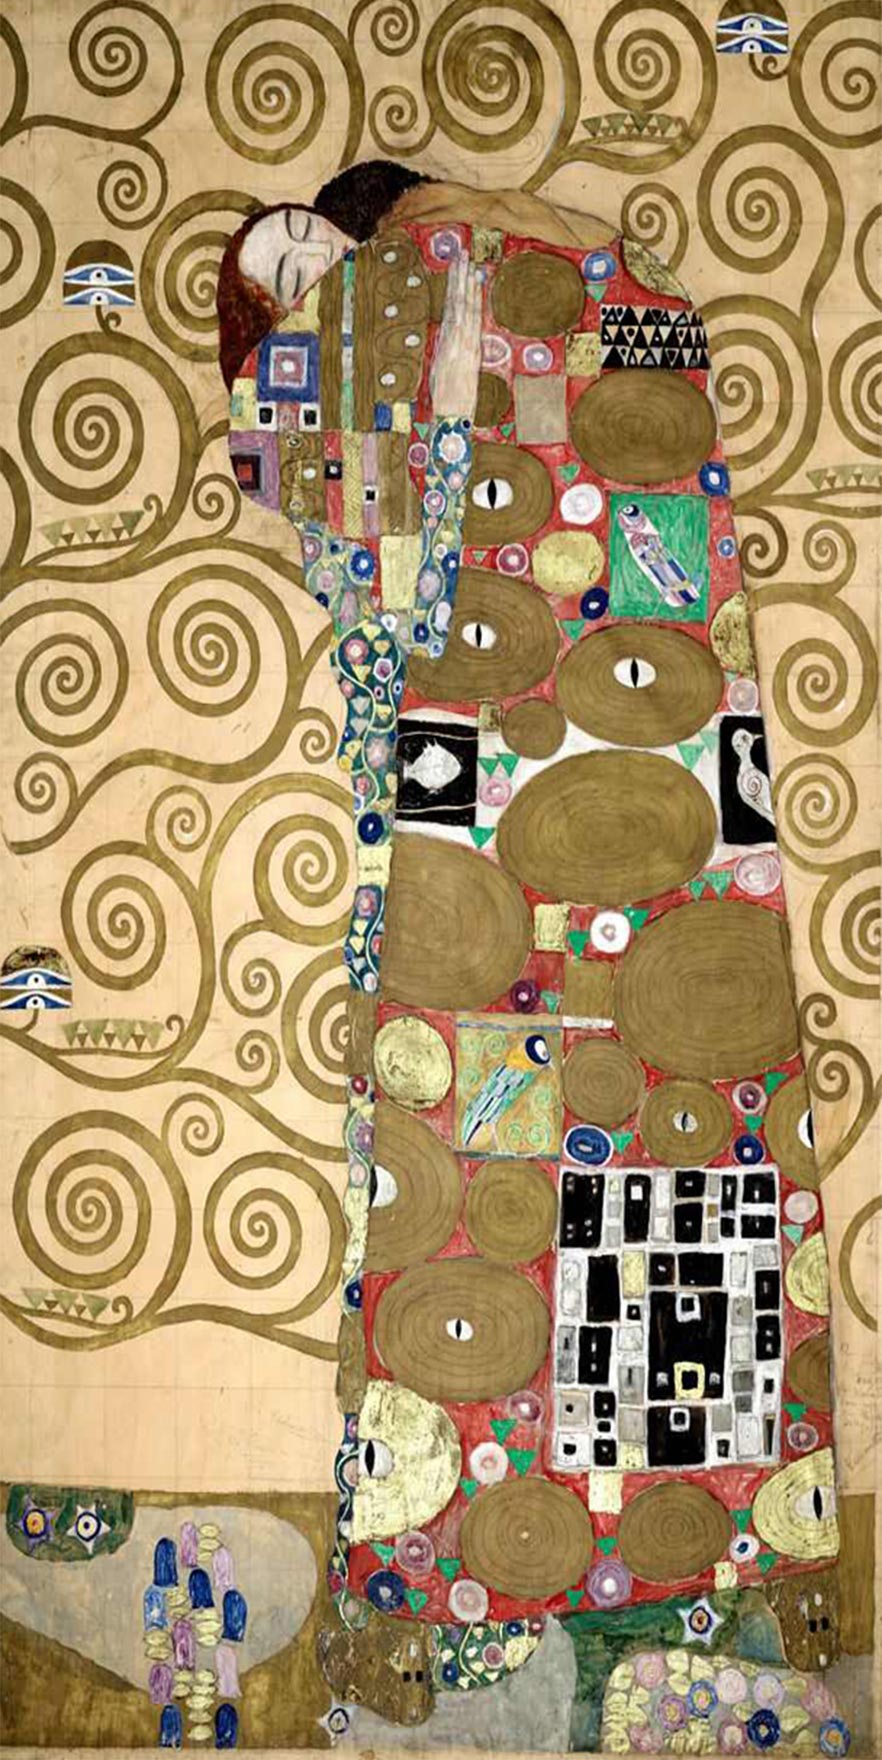 Quadro panorâmico - Gustav Klimt - Abraço